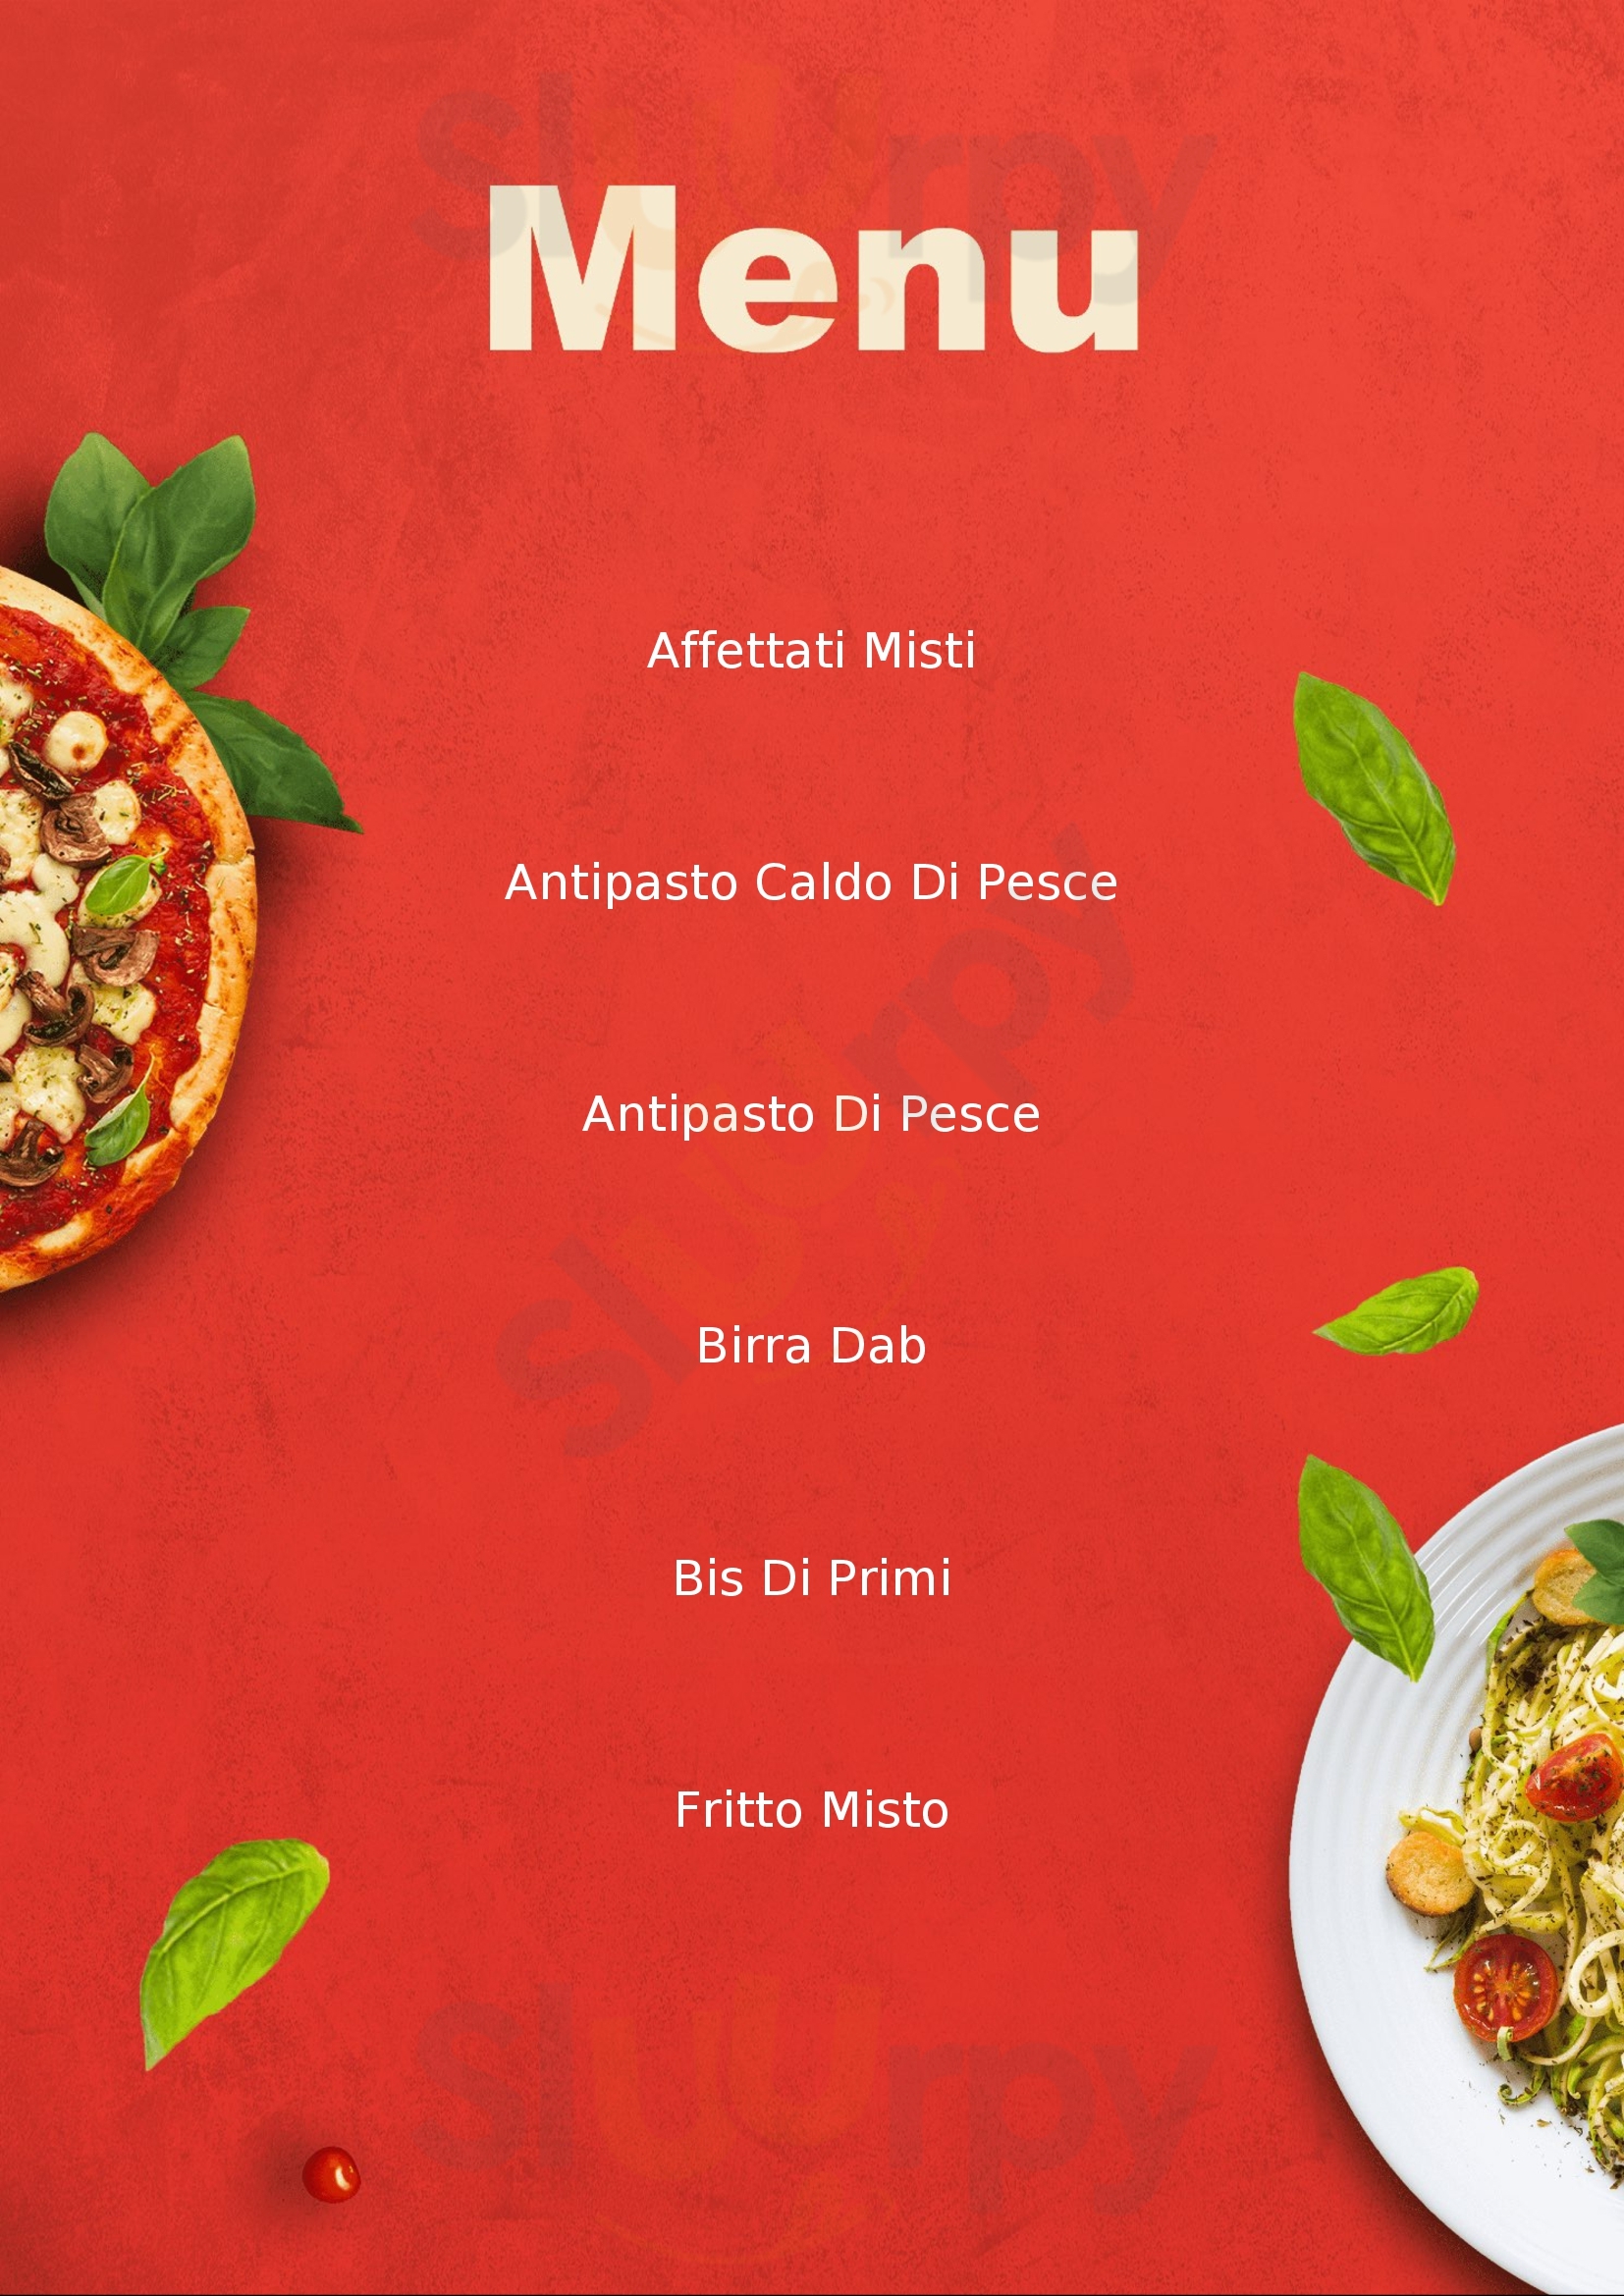 Ristorante Pizzeria Sandeni Carpi menù 1 pagina